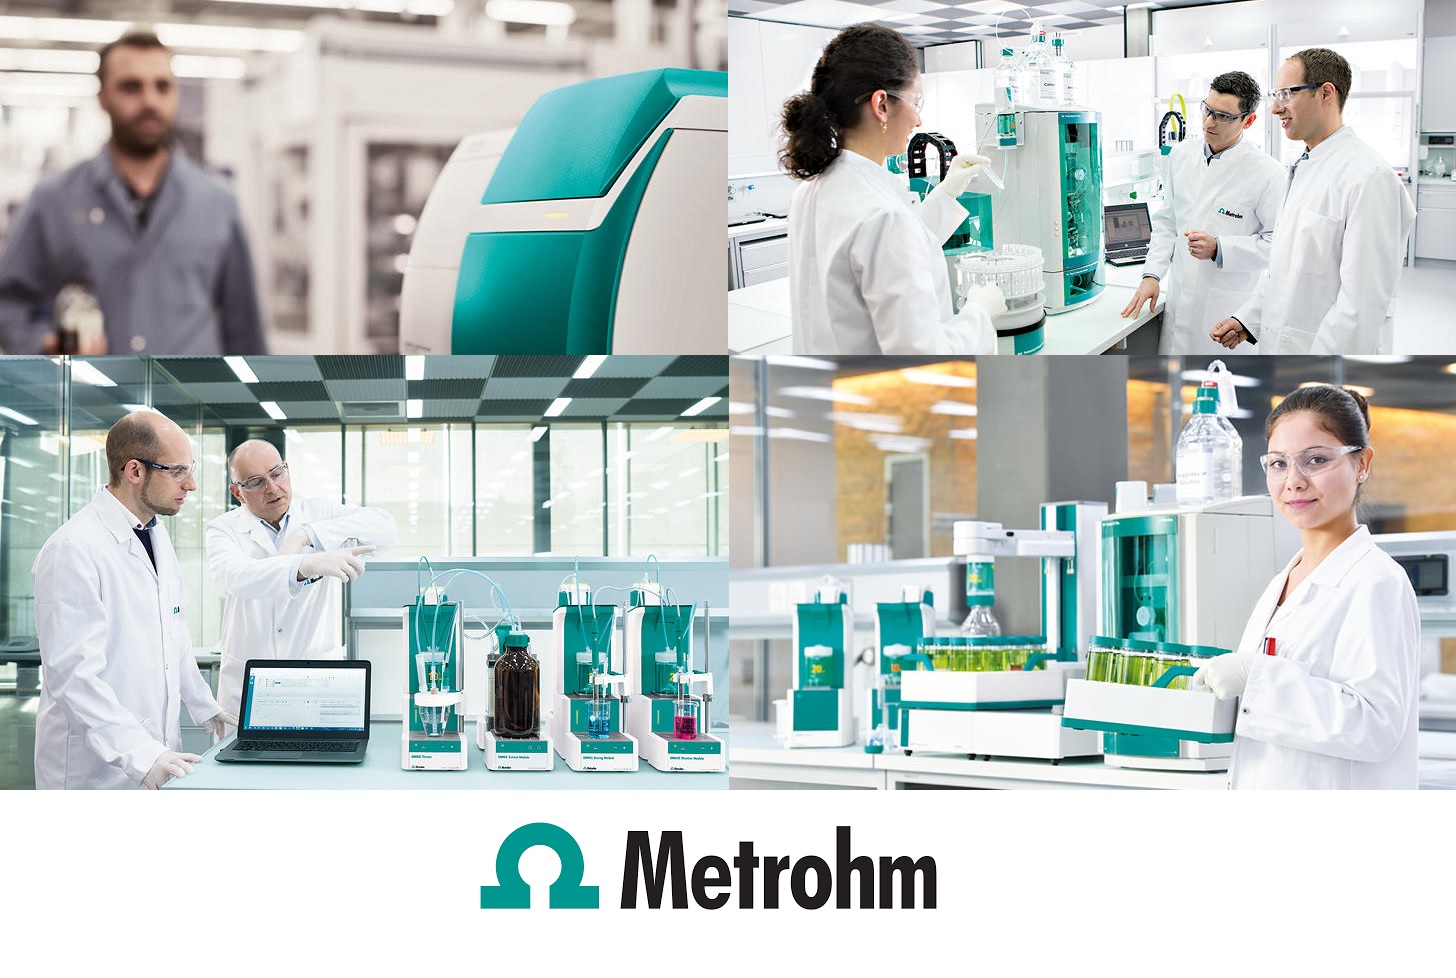 Metrohm: Avoid titration mistakes through best practice sensor handling